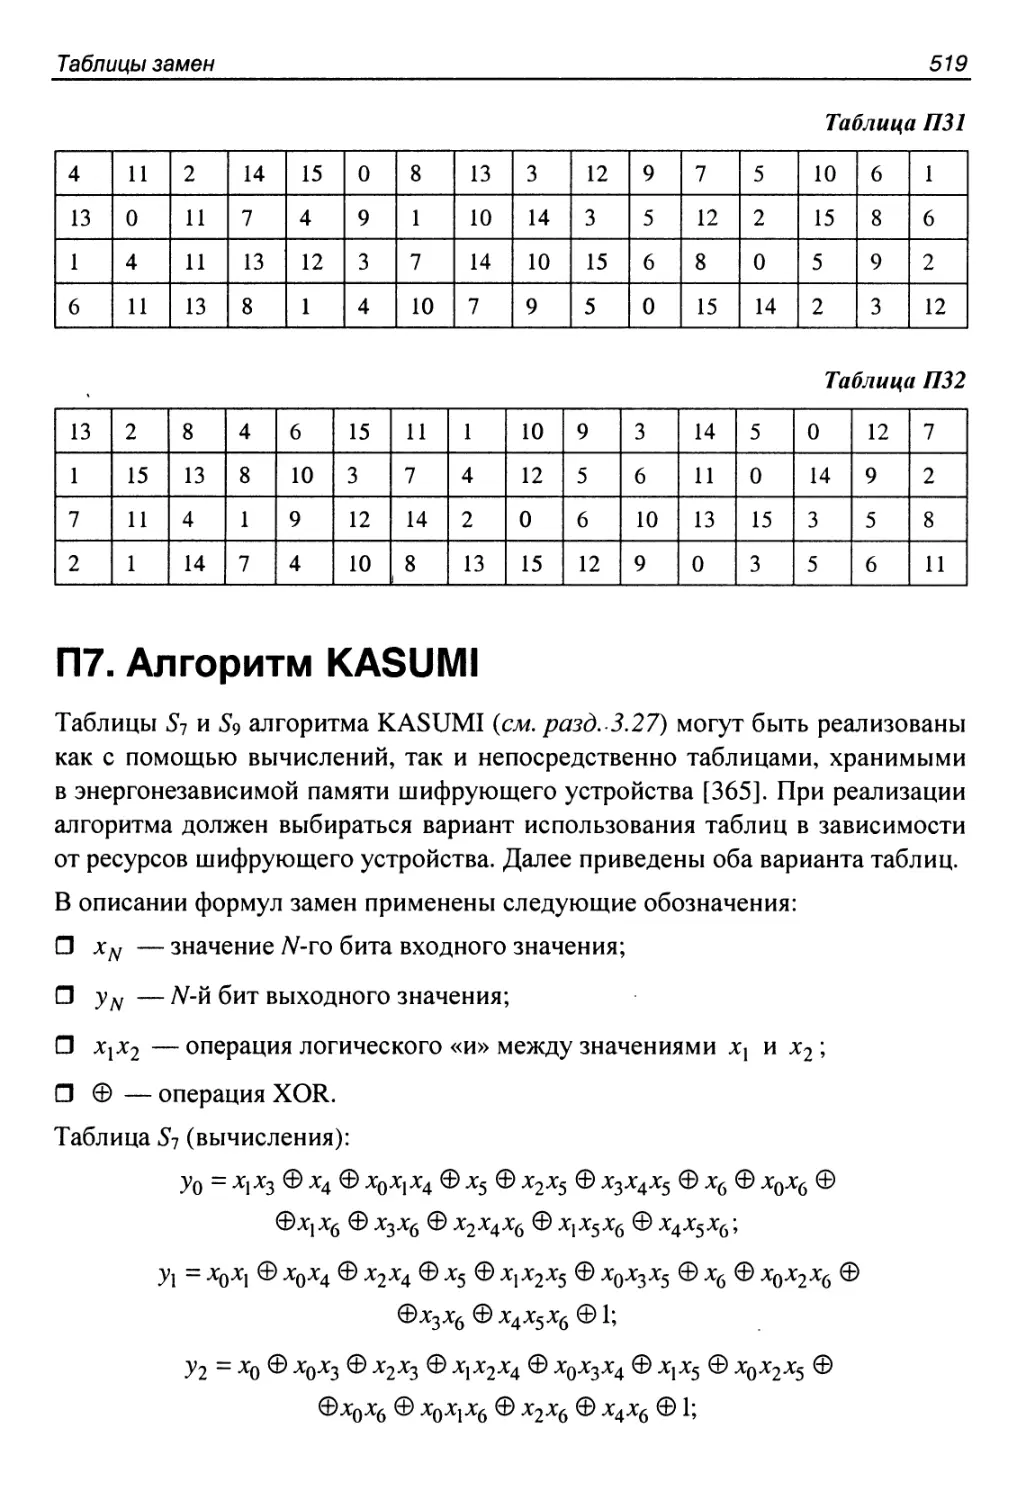 П7. Алгоритм KASUMI